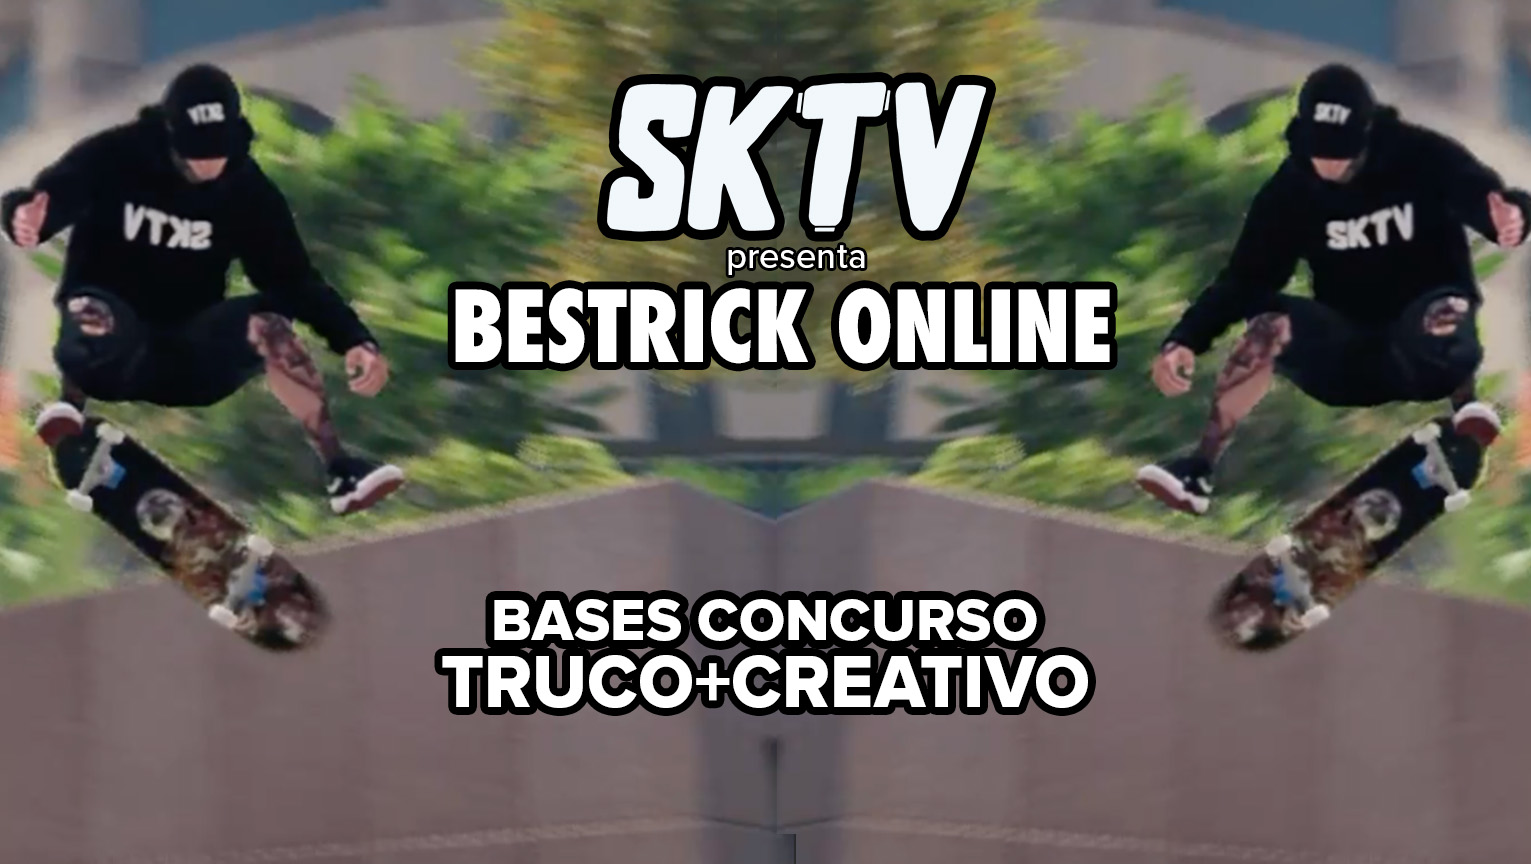 BESTRICK ONLINE x SKTV